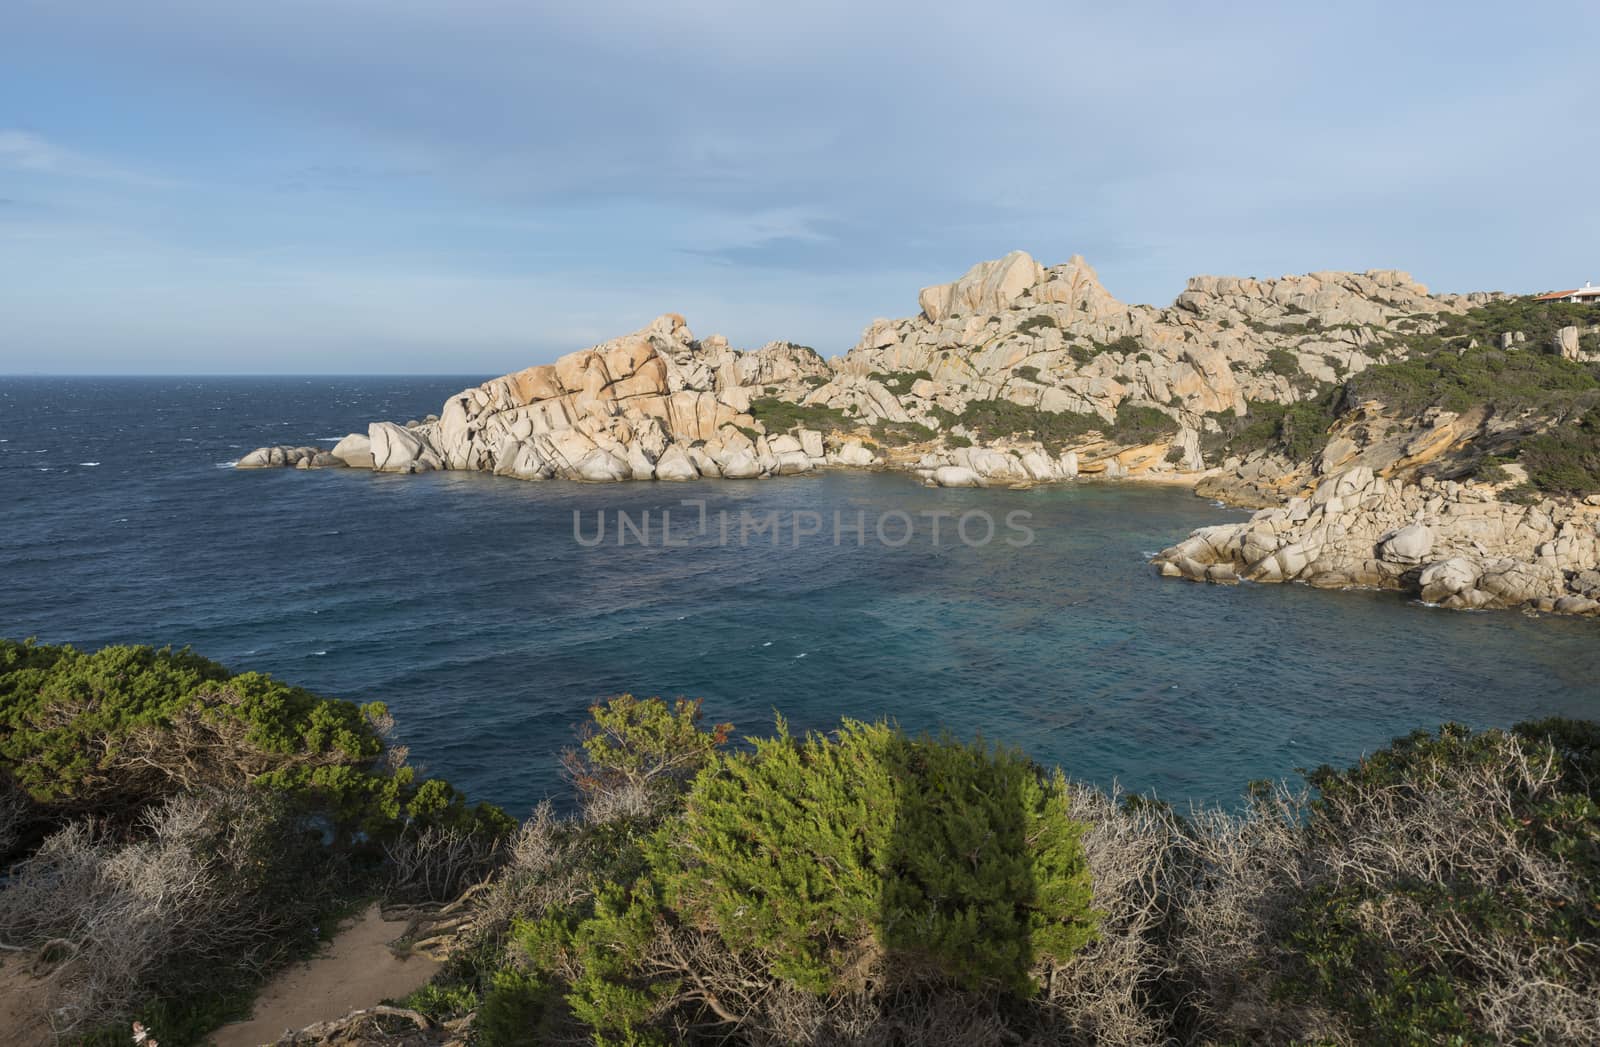 rocks and sea in palua on sardinia island by compuinfoto